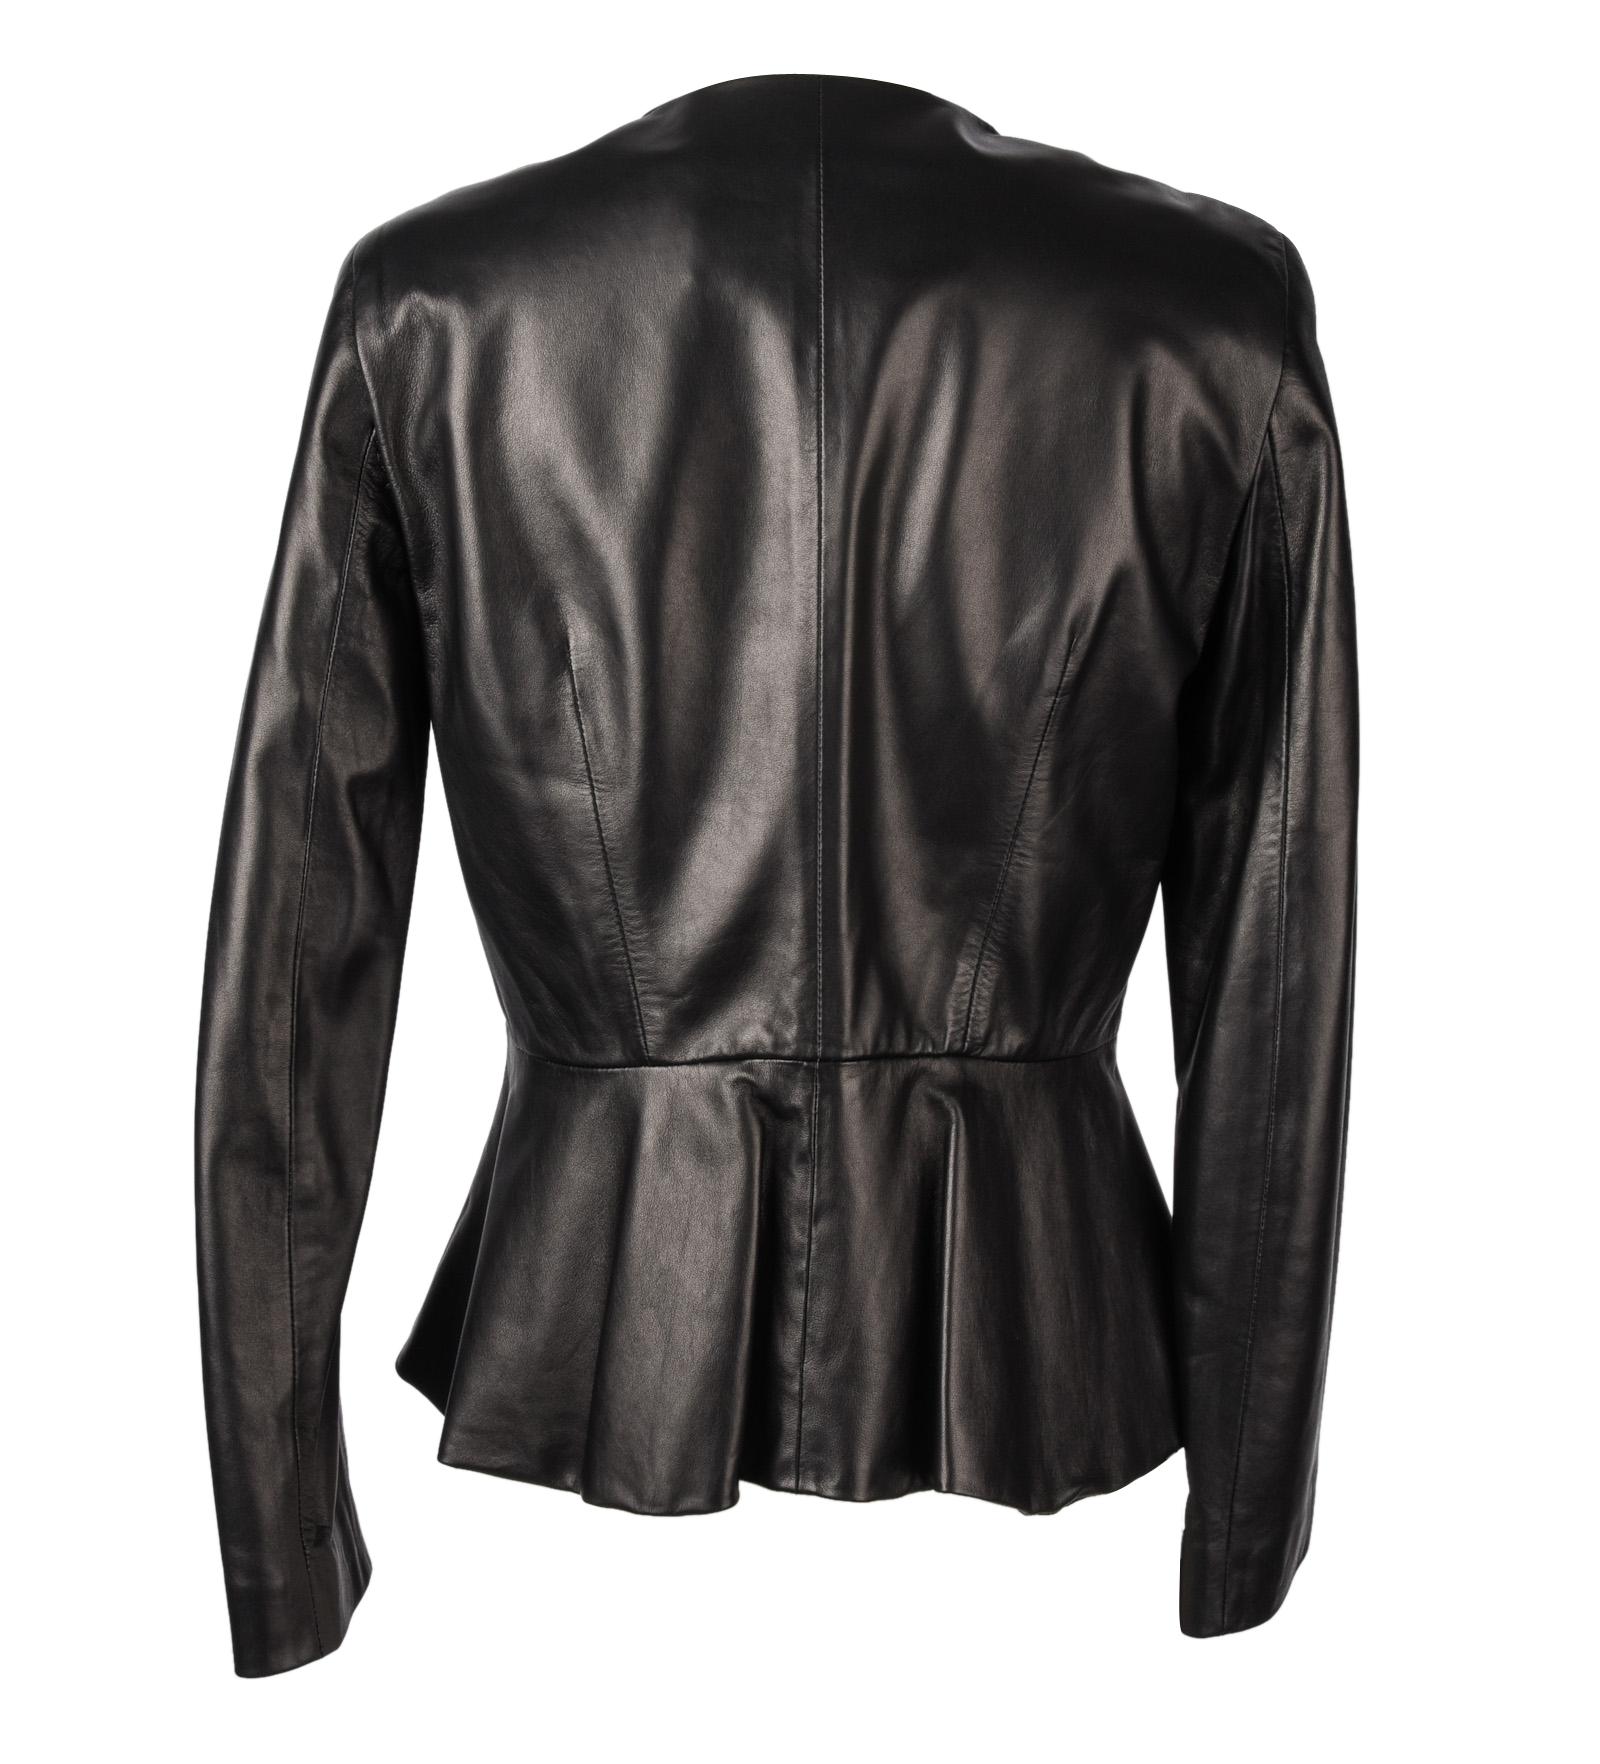 Carolina Herrera Jacket Peplum Black Lambskin Leather Feather Light 8 mint 1